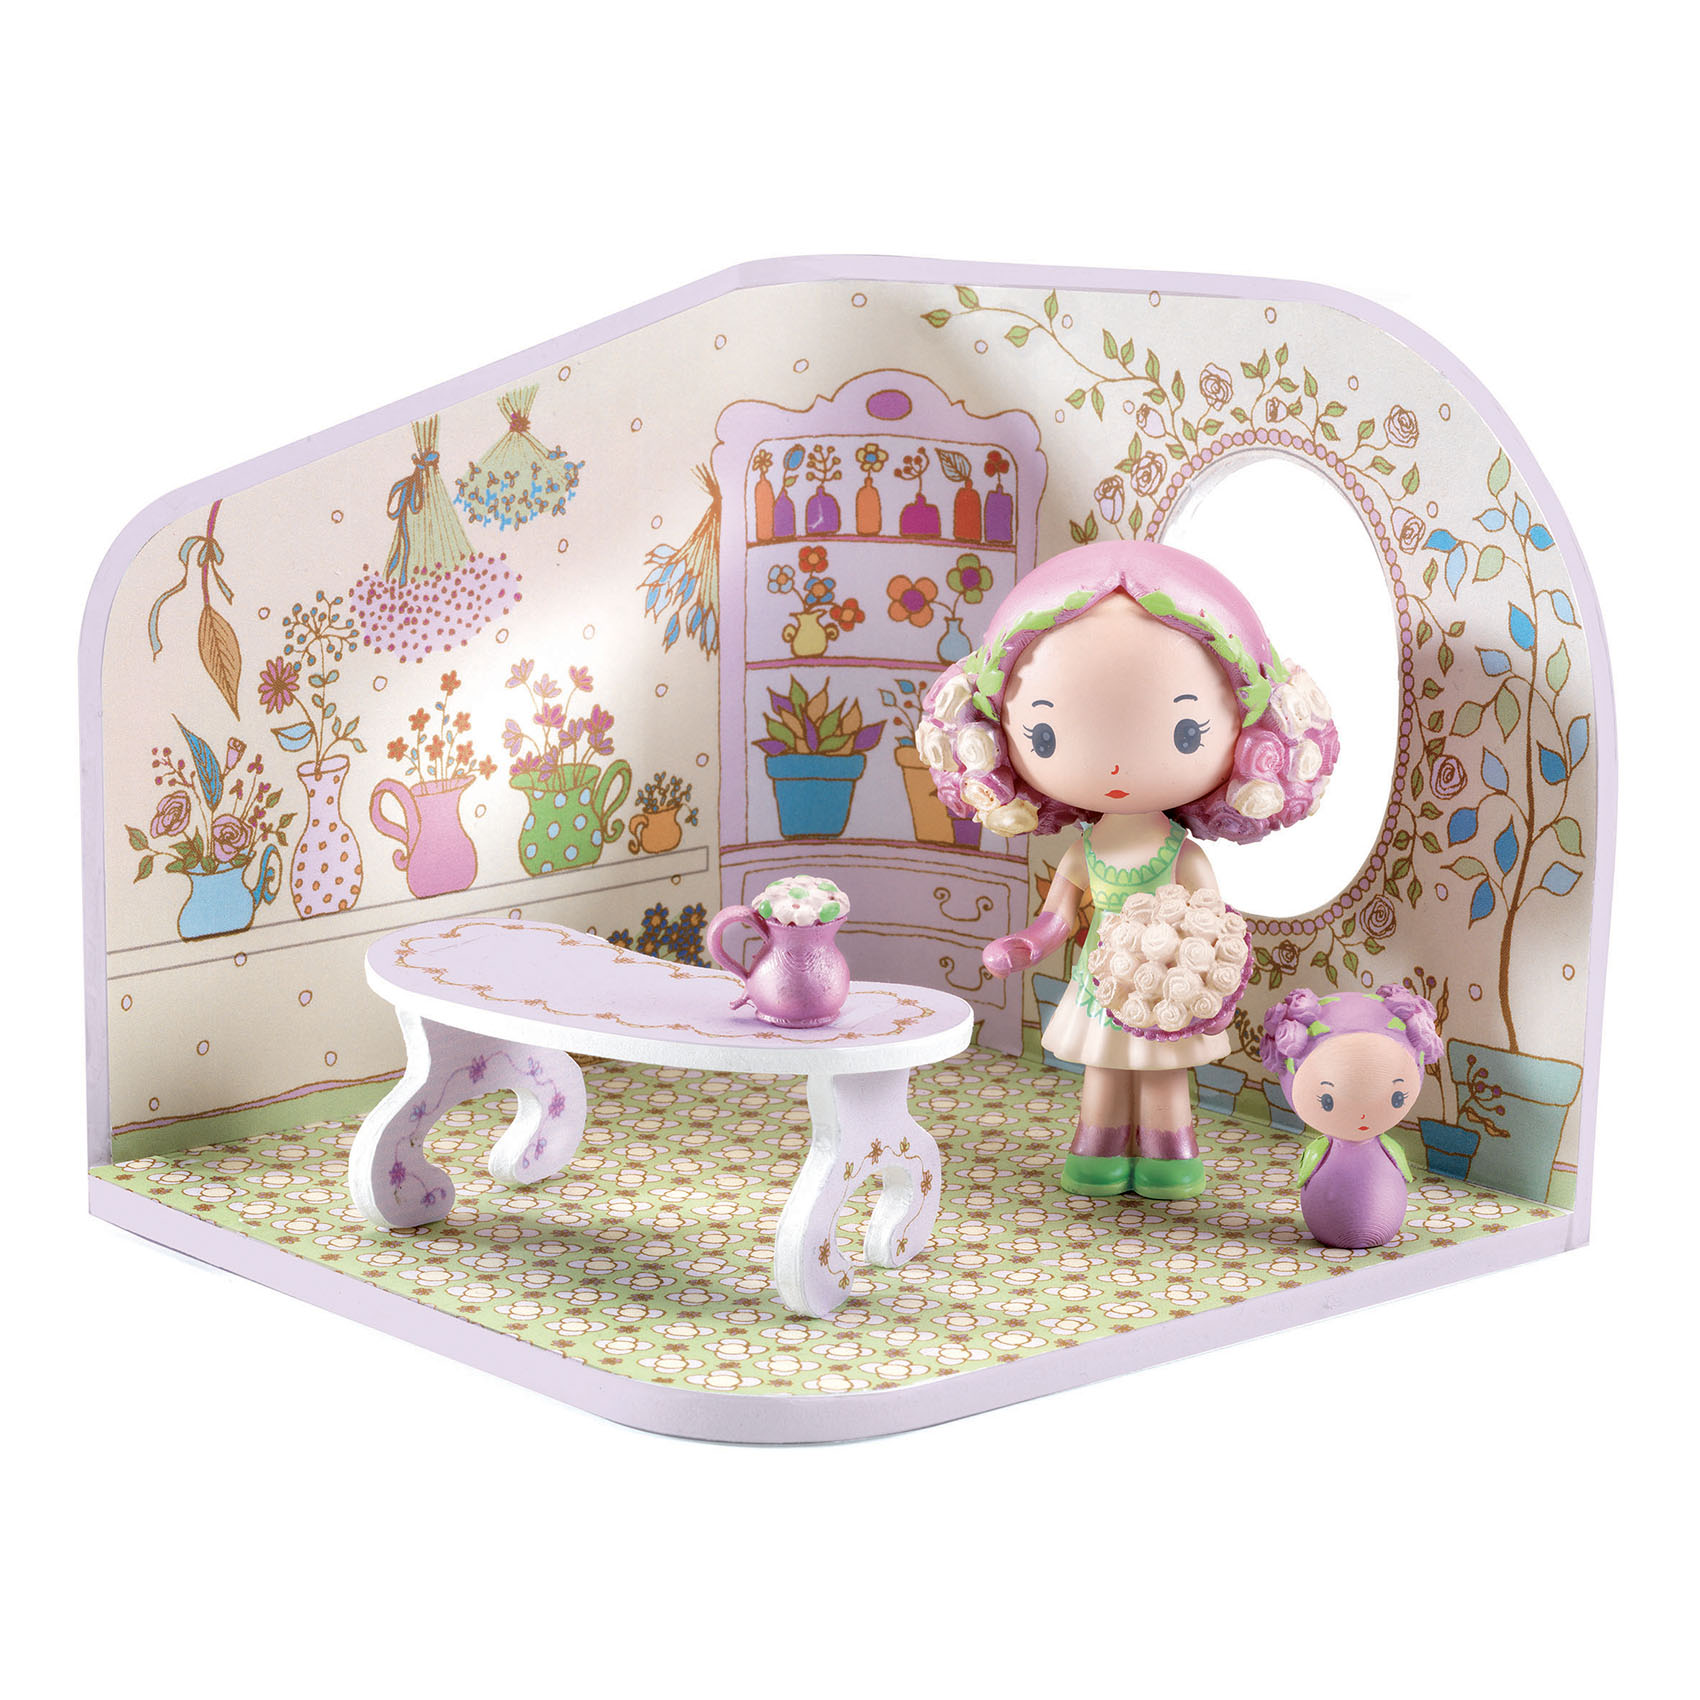 Rosalie & Rosie - blomsterbutik, Tinyly